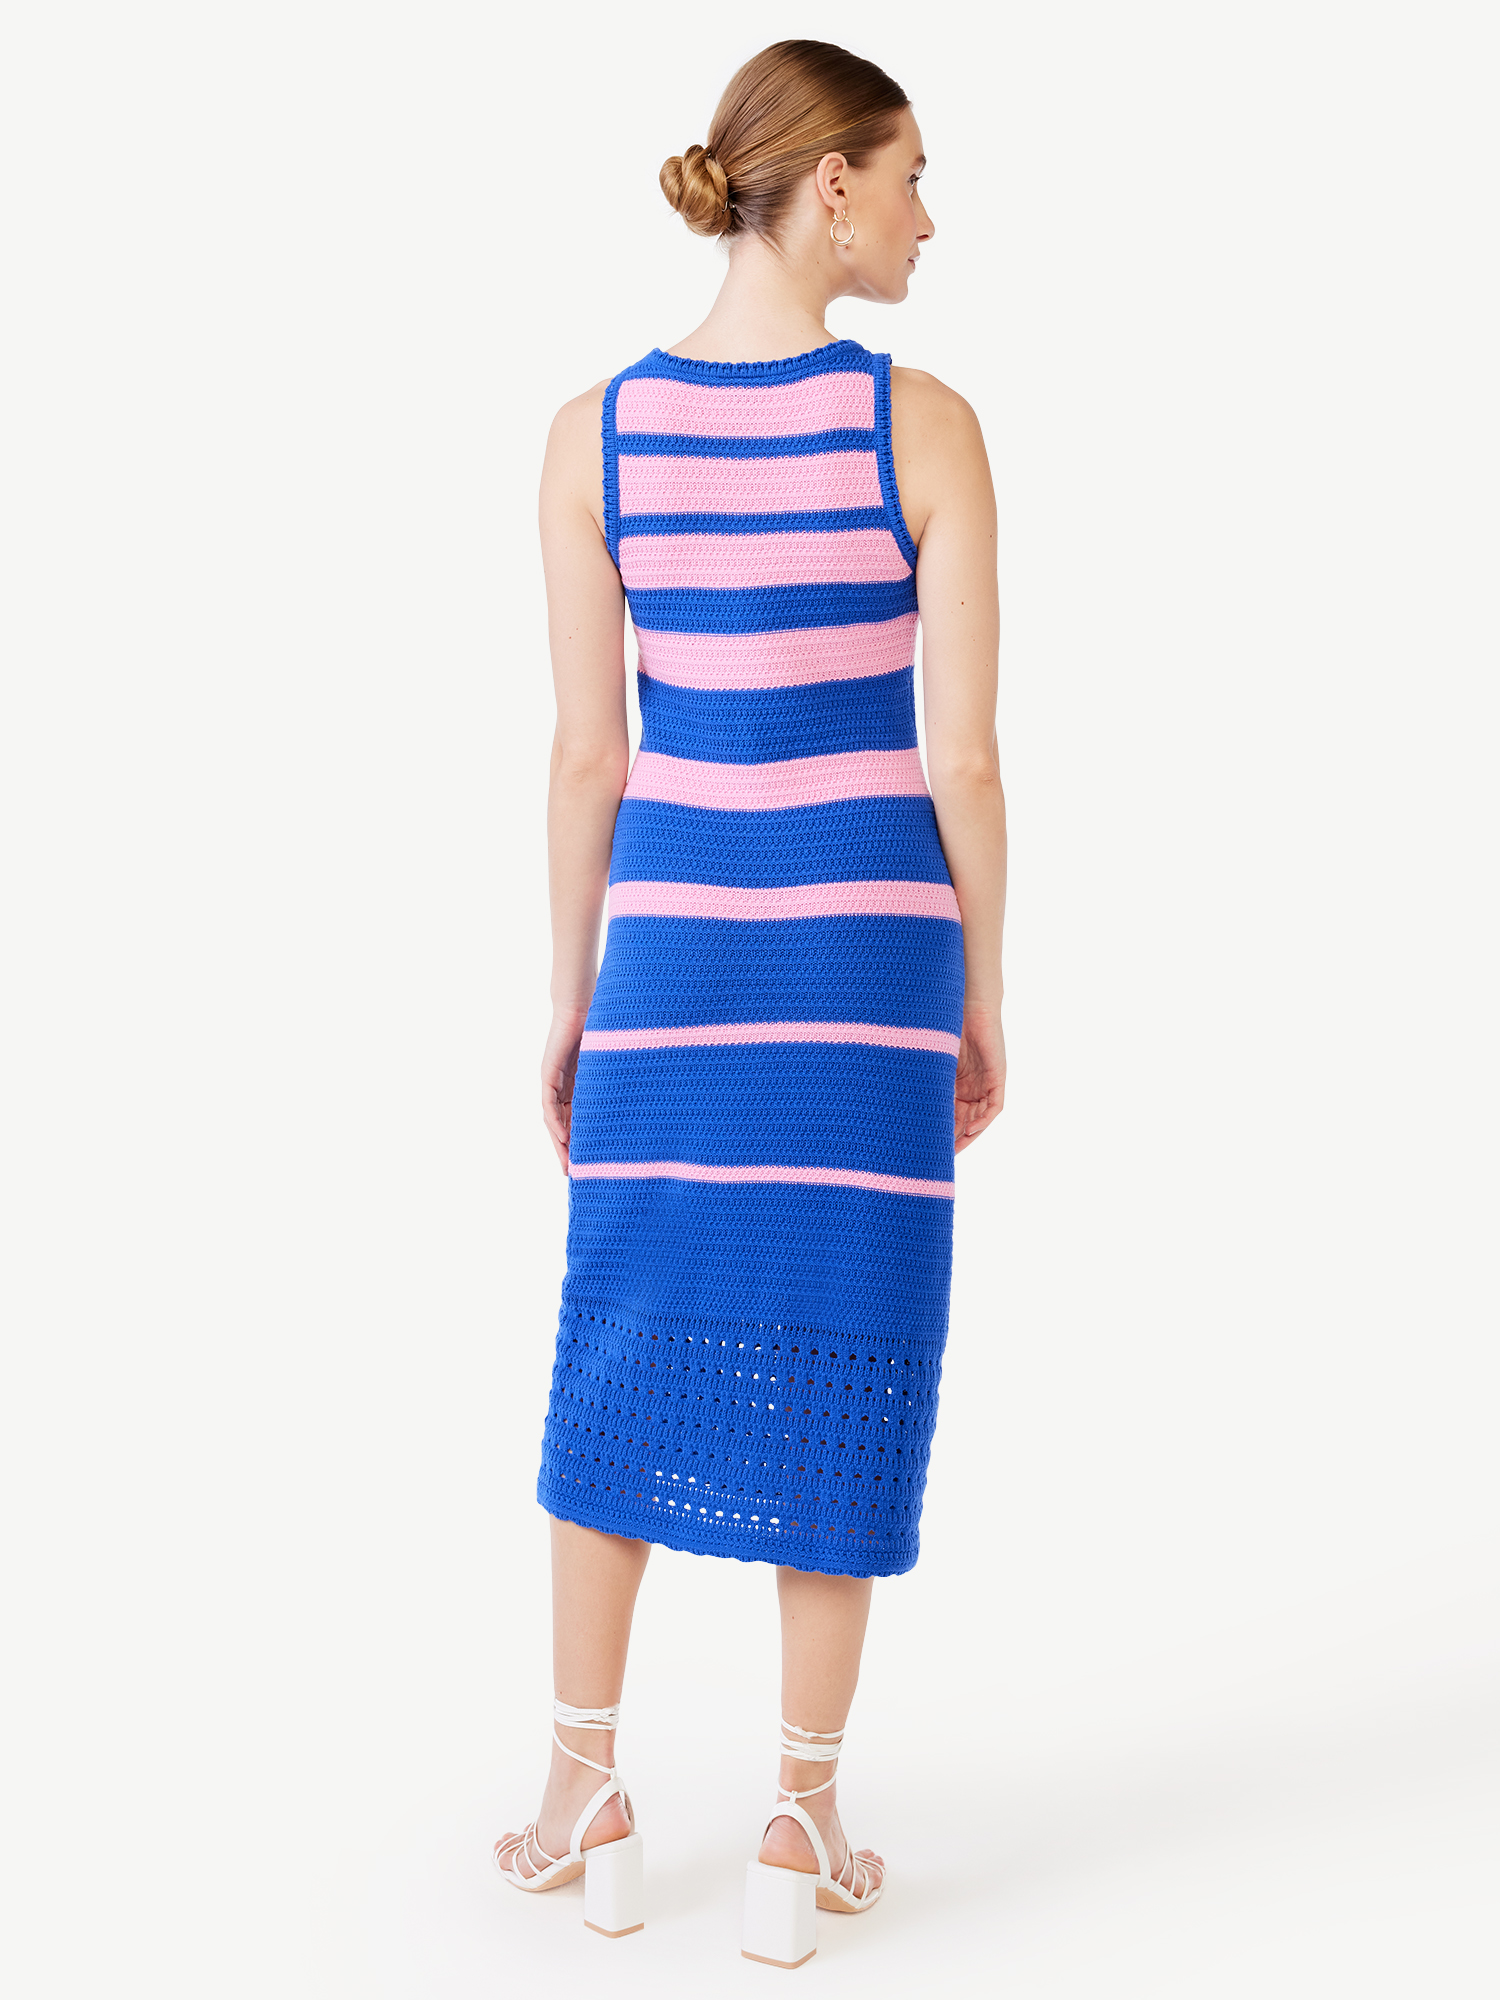 Scoop Women’s Striped Crochet Dress, Mid-Calf Length - image 4 of 5